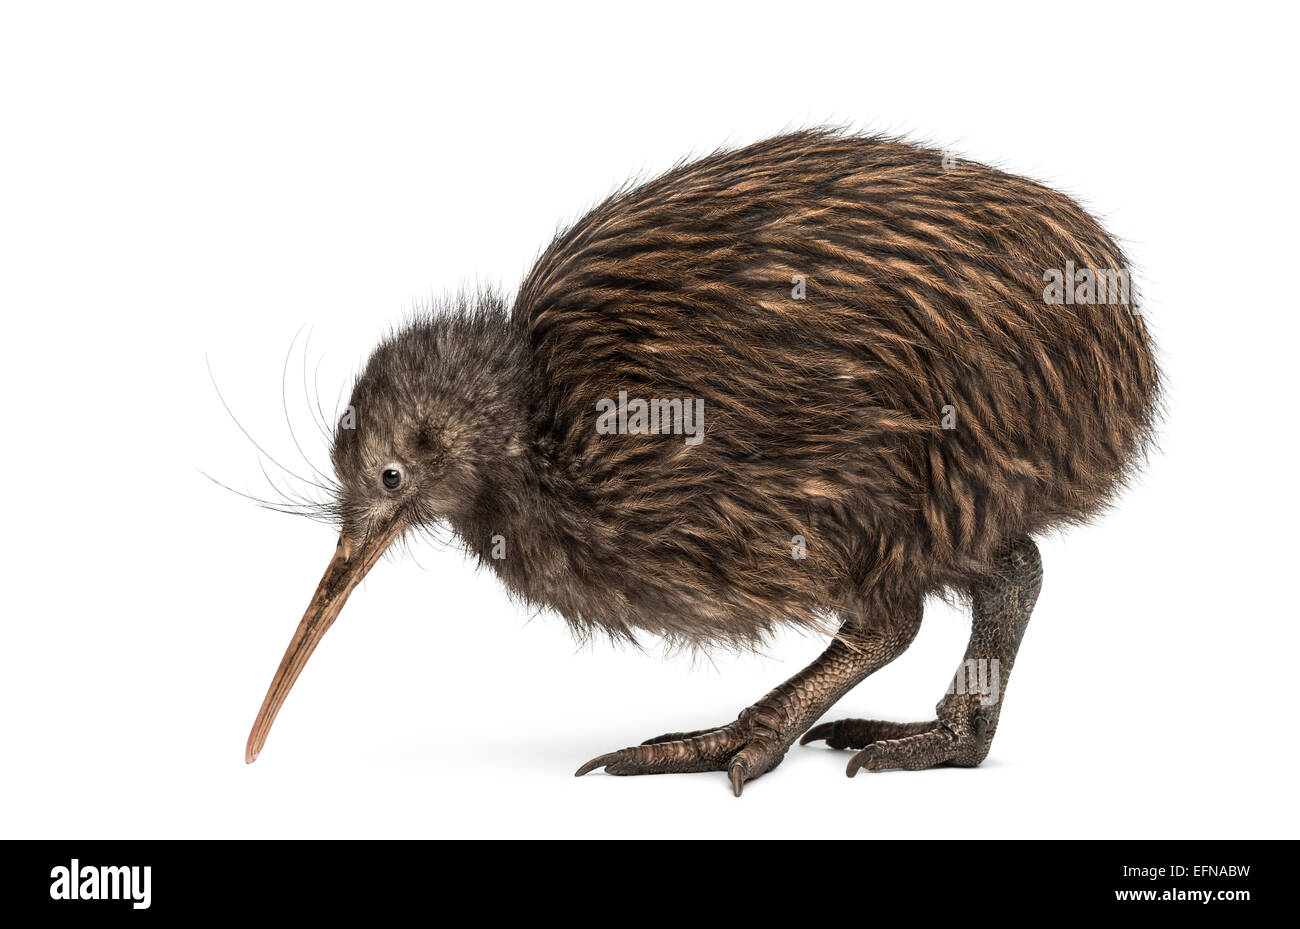 Wild kiwi hi-res stock photography and images - Alamy